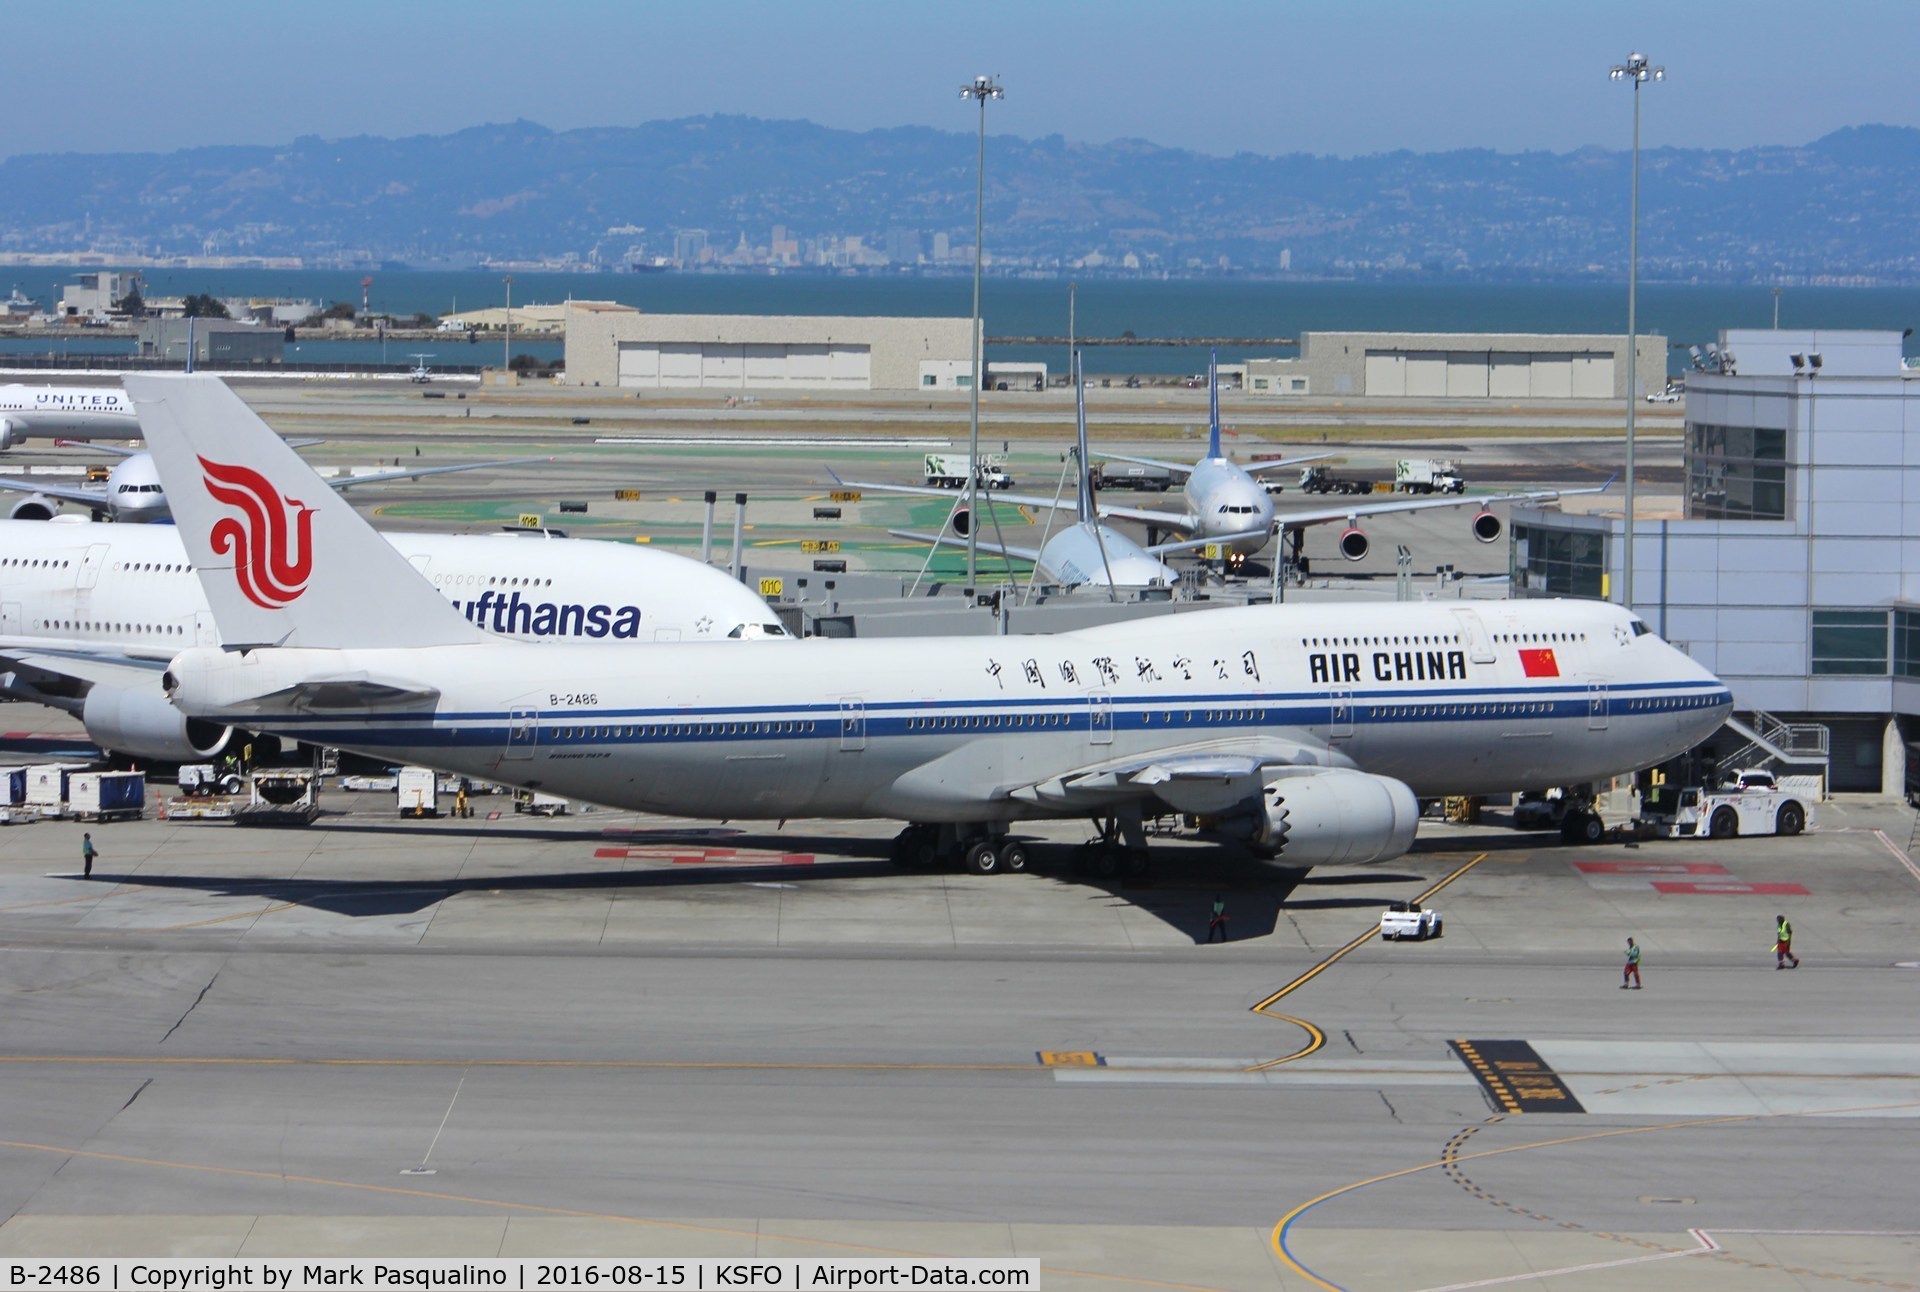 B-2486, 2014 Boeing 747-89L C/N 41192, Boeing 747-800